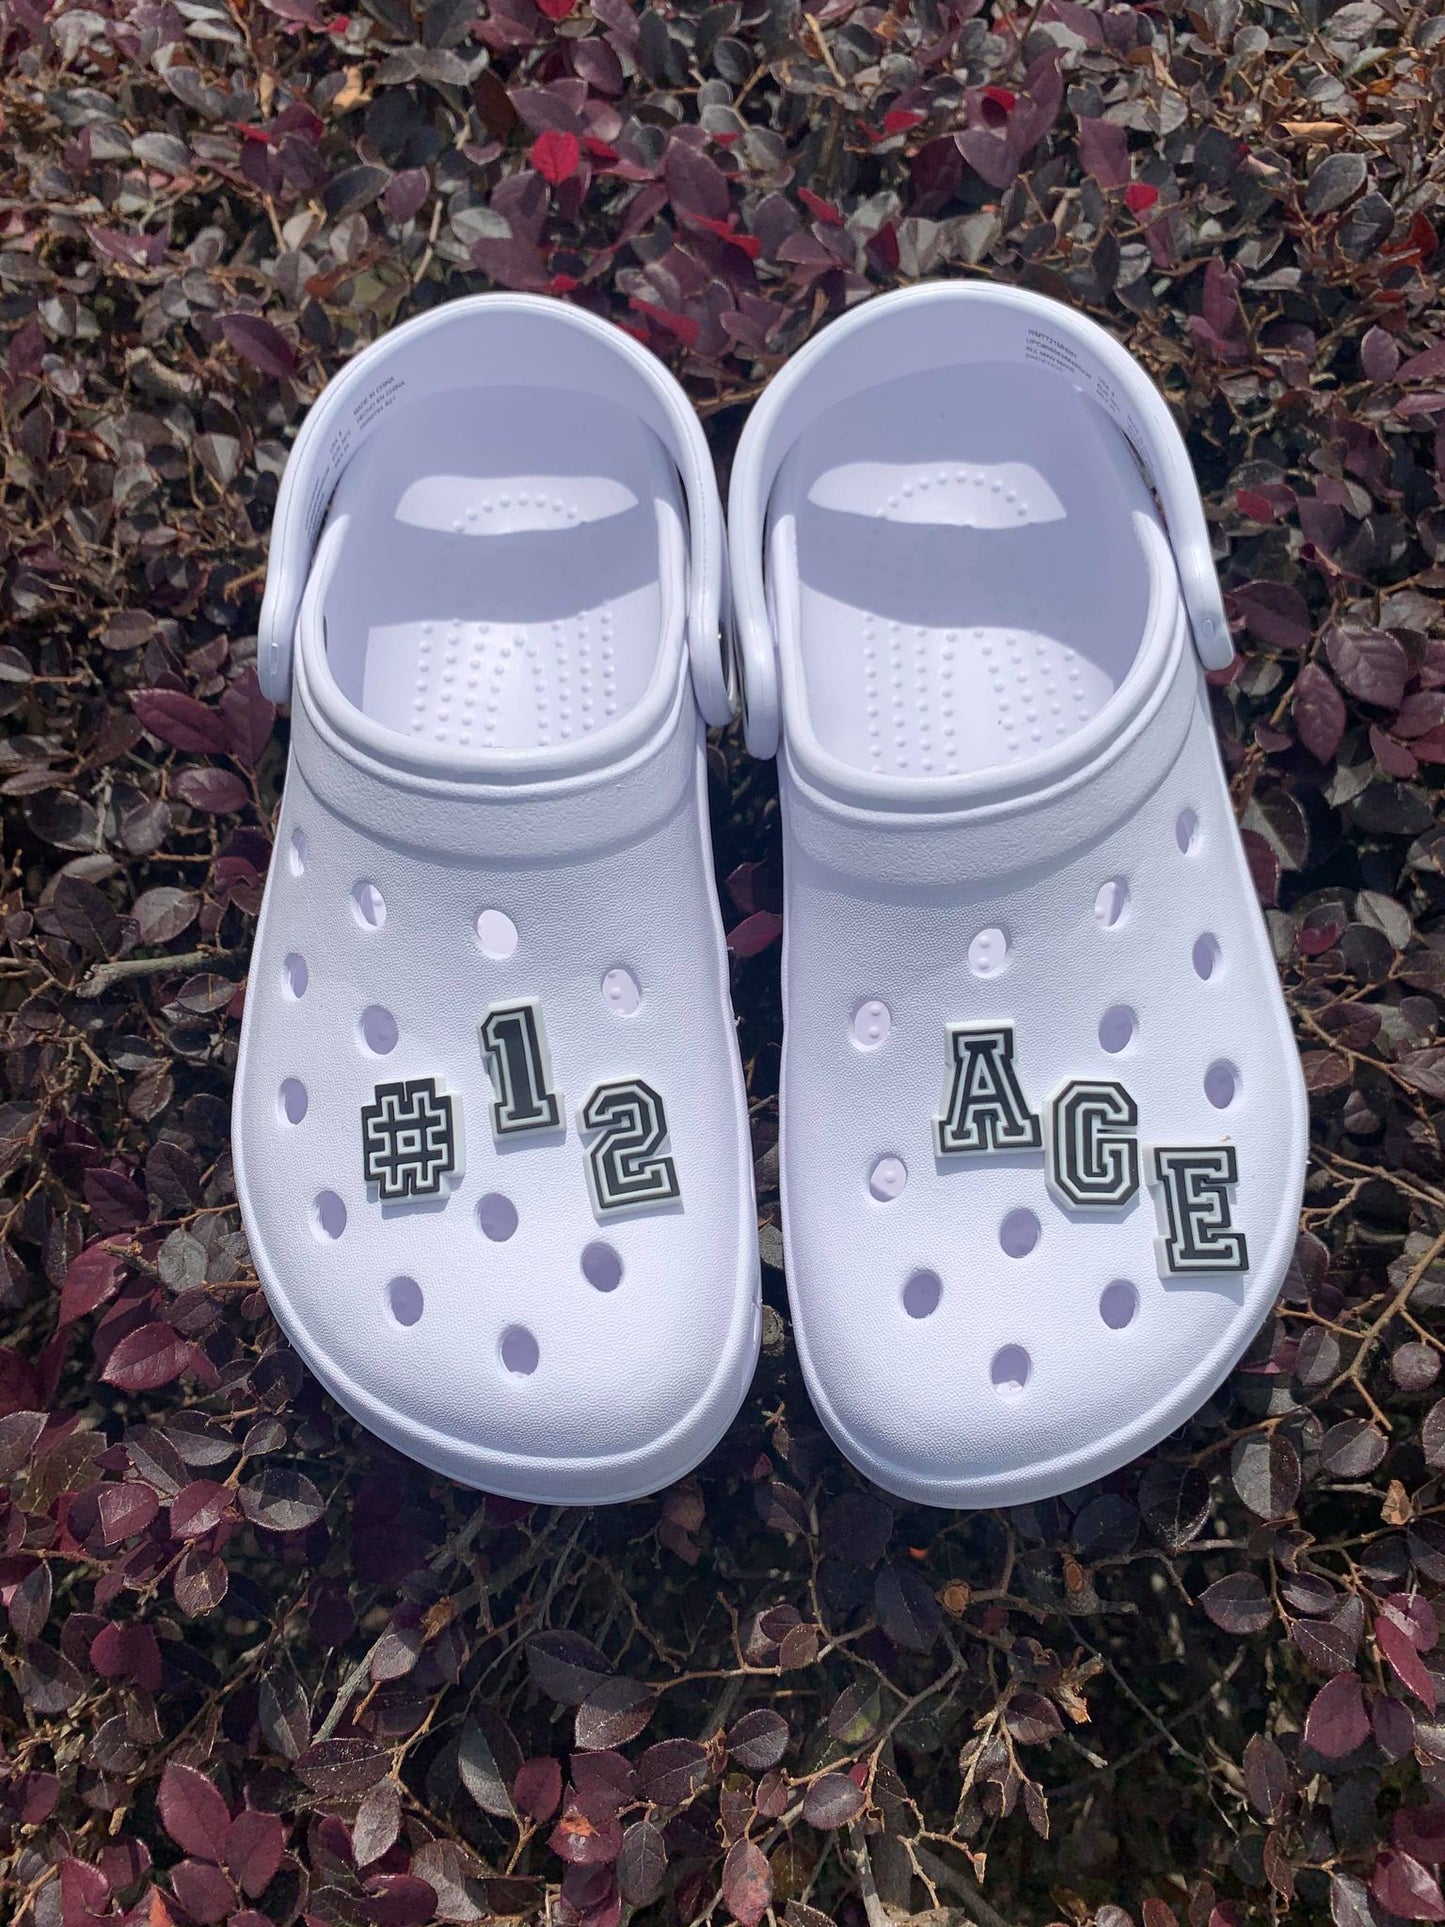 26pc White Alphabet LETTER Charms for Crocs Laces Keychains